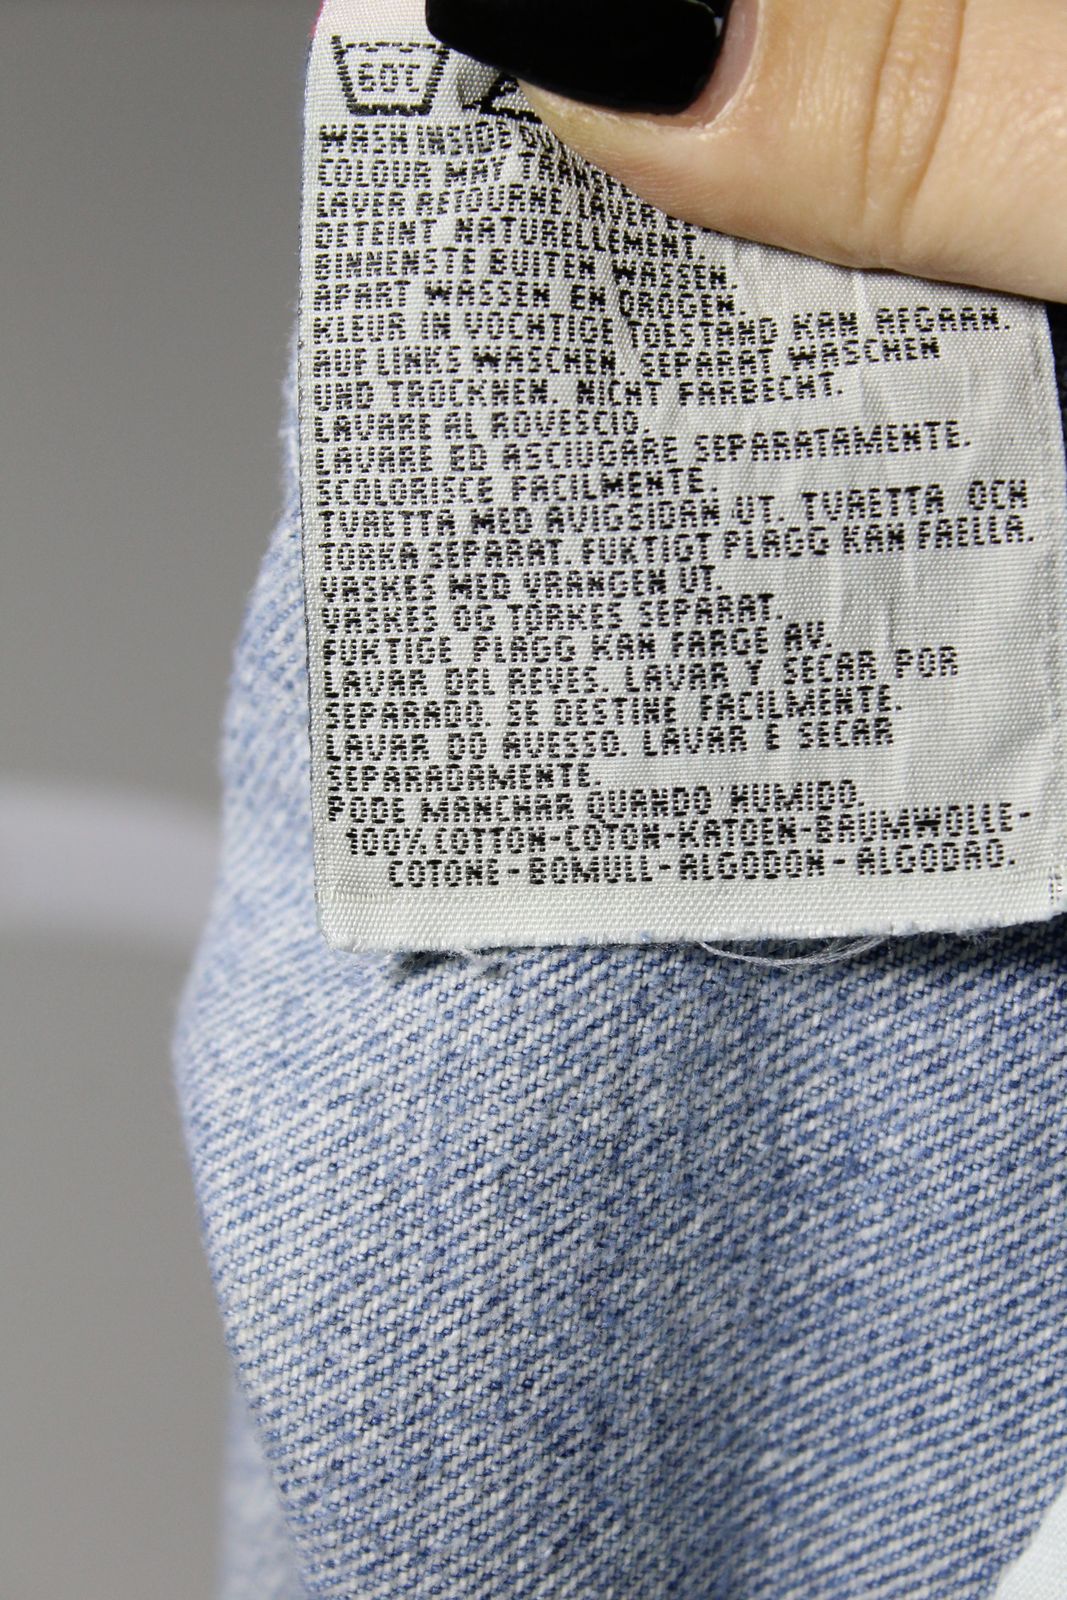 Levi's 501 Denim W33 L36 Made In USA Jeans Vintage